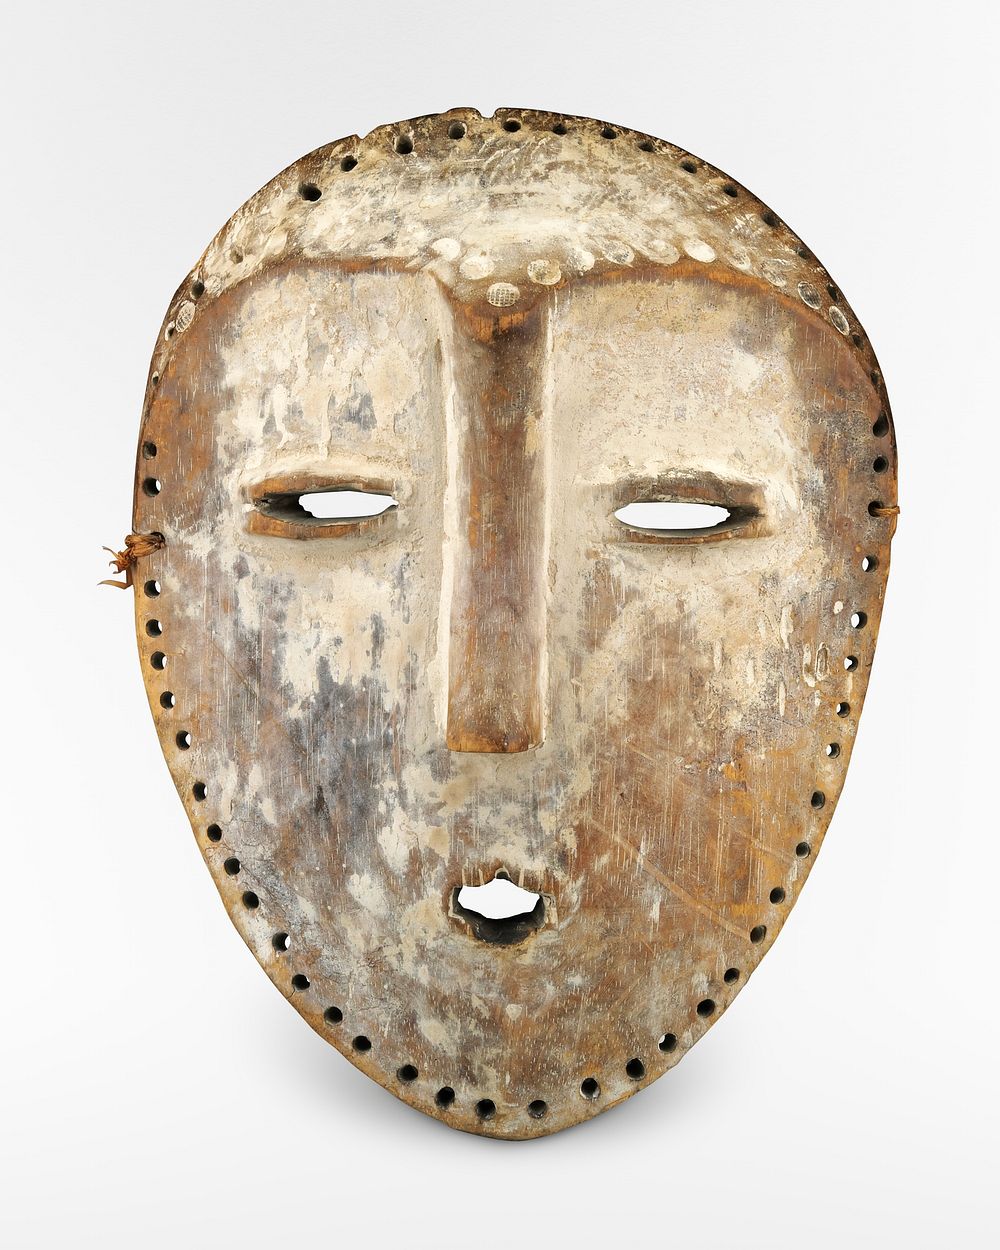 Mask. Original from the Minneapolis Institute of Art.